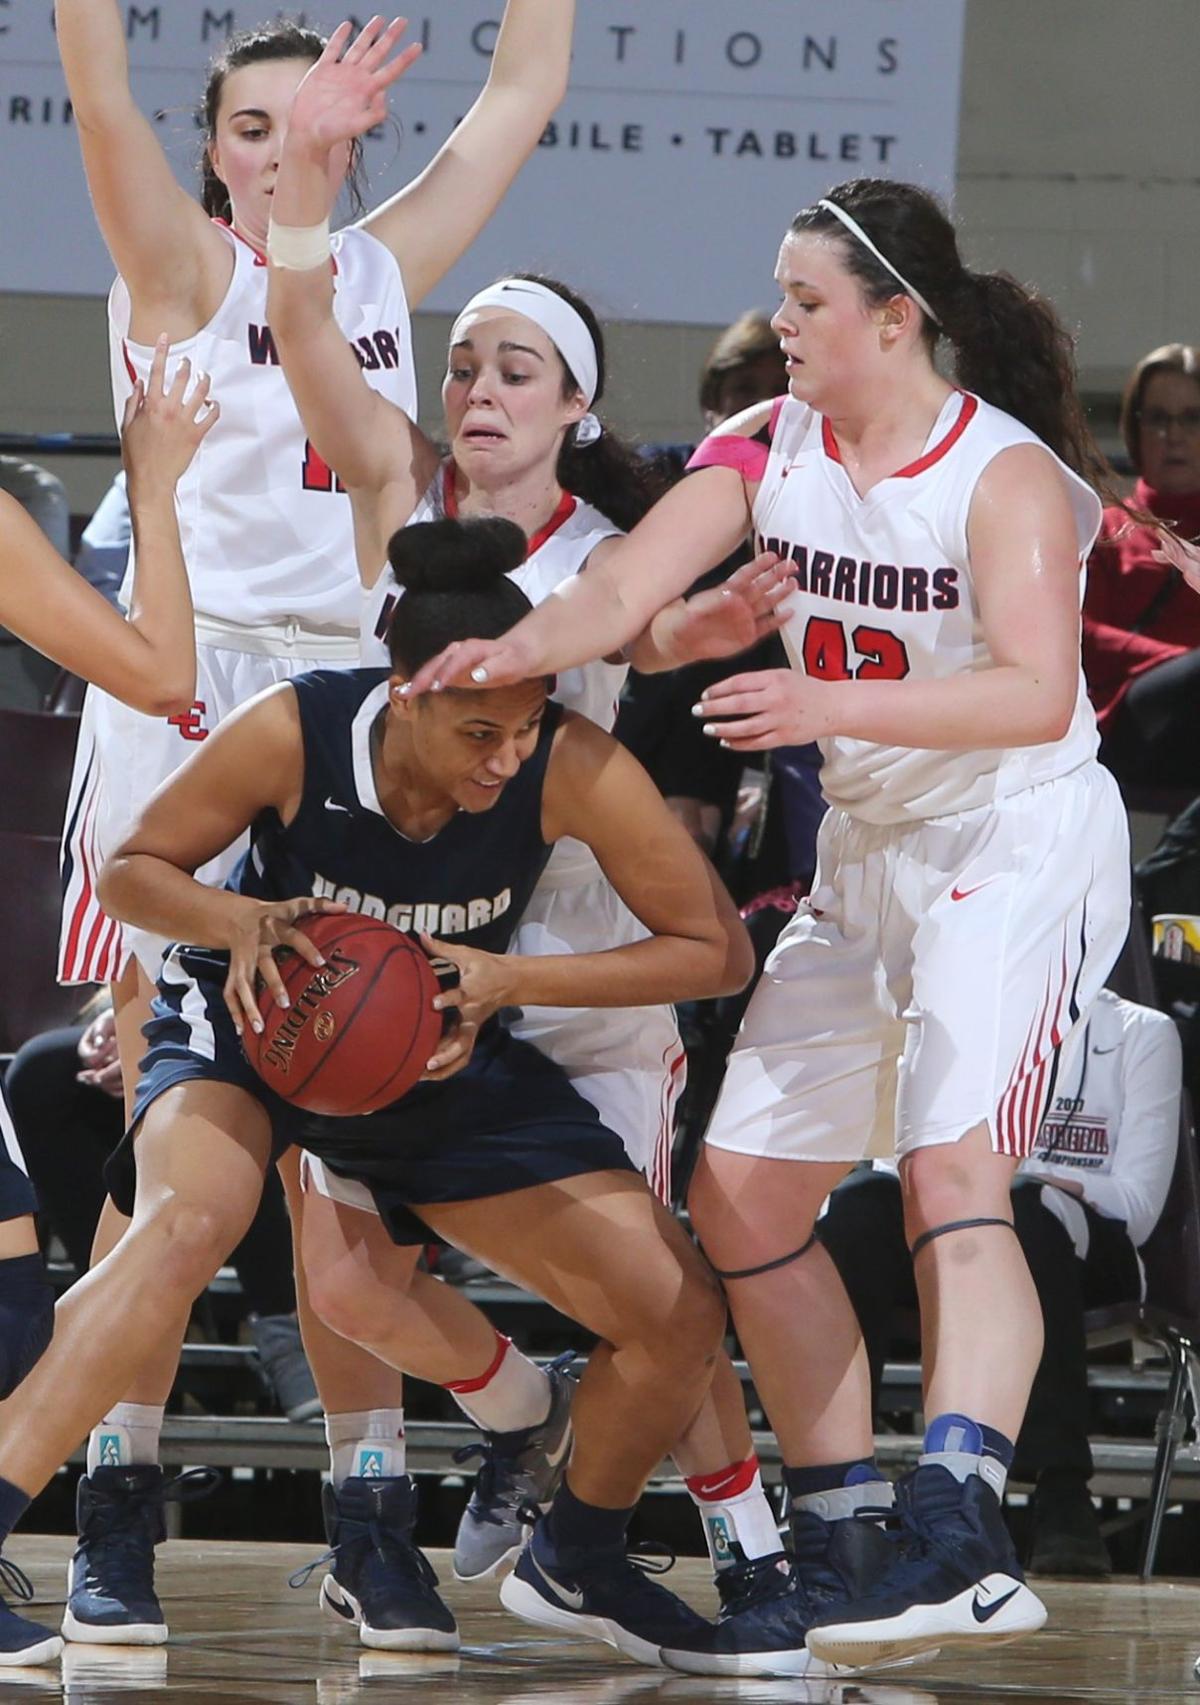 Photos: NAIA Women's Basketball semifinals | College Sports